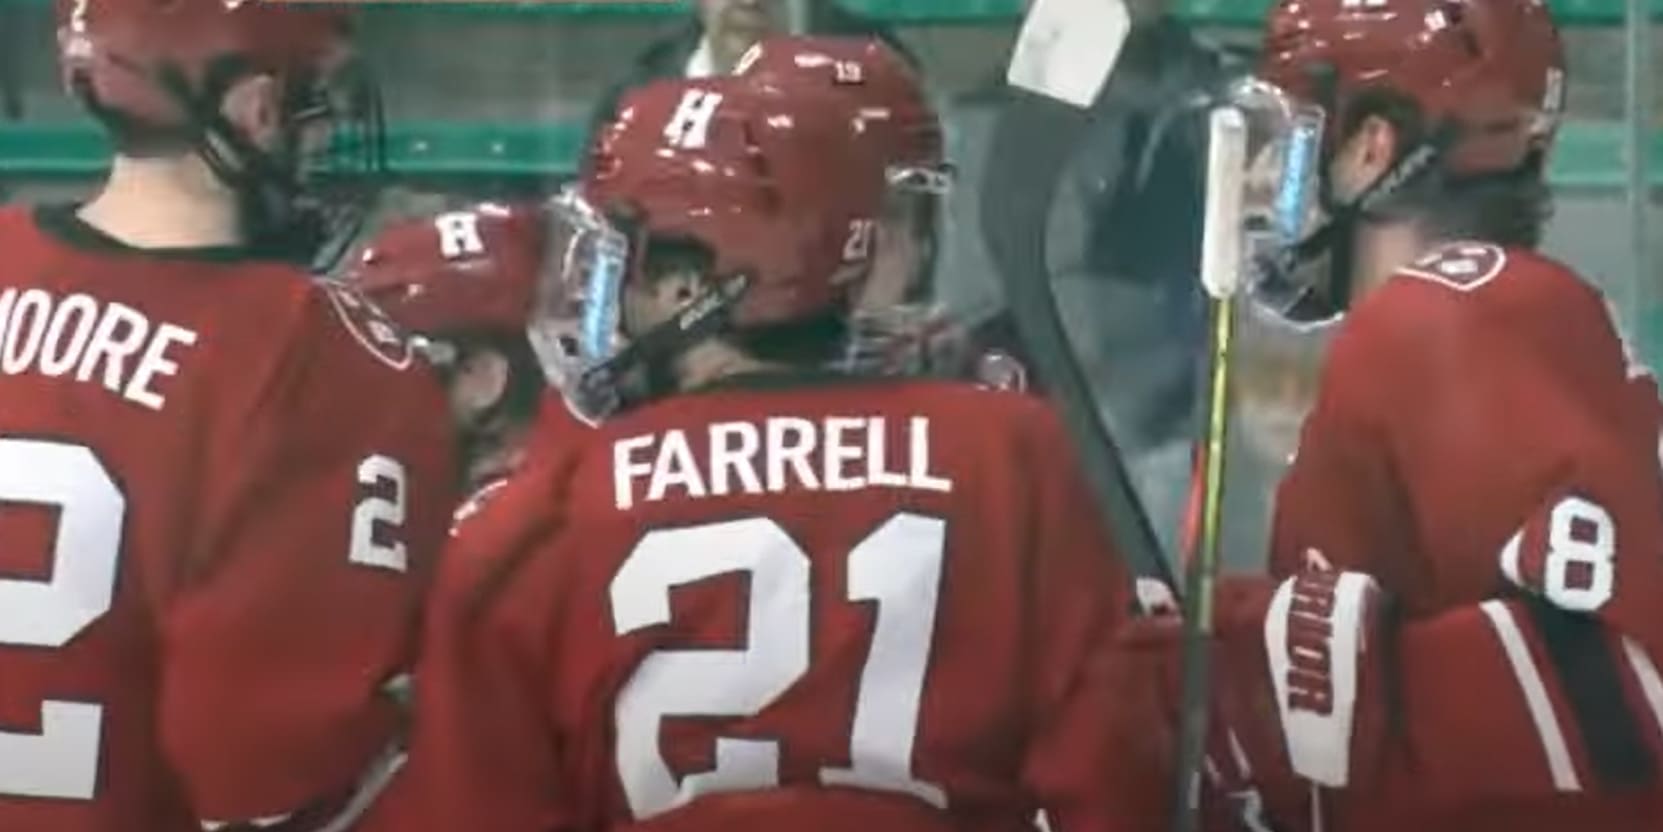 Montreal Canadiens prospect Sean Farrell